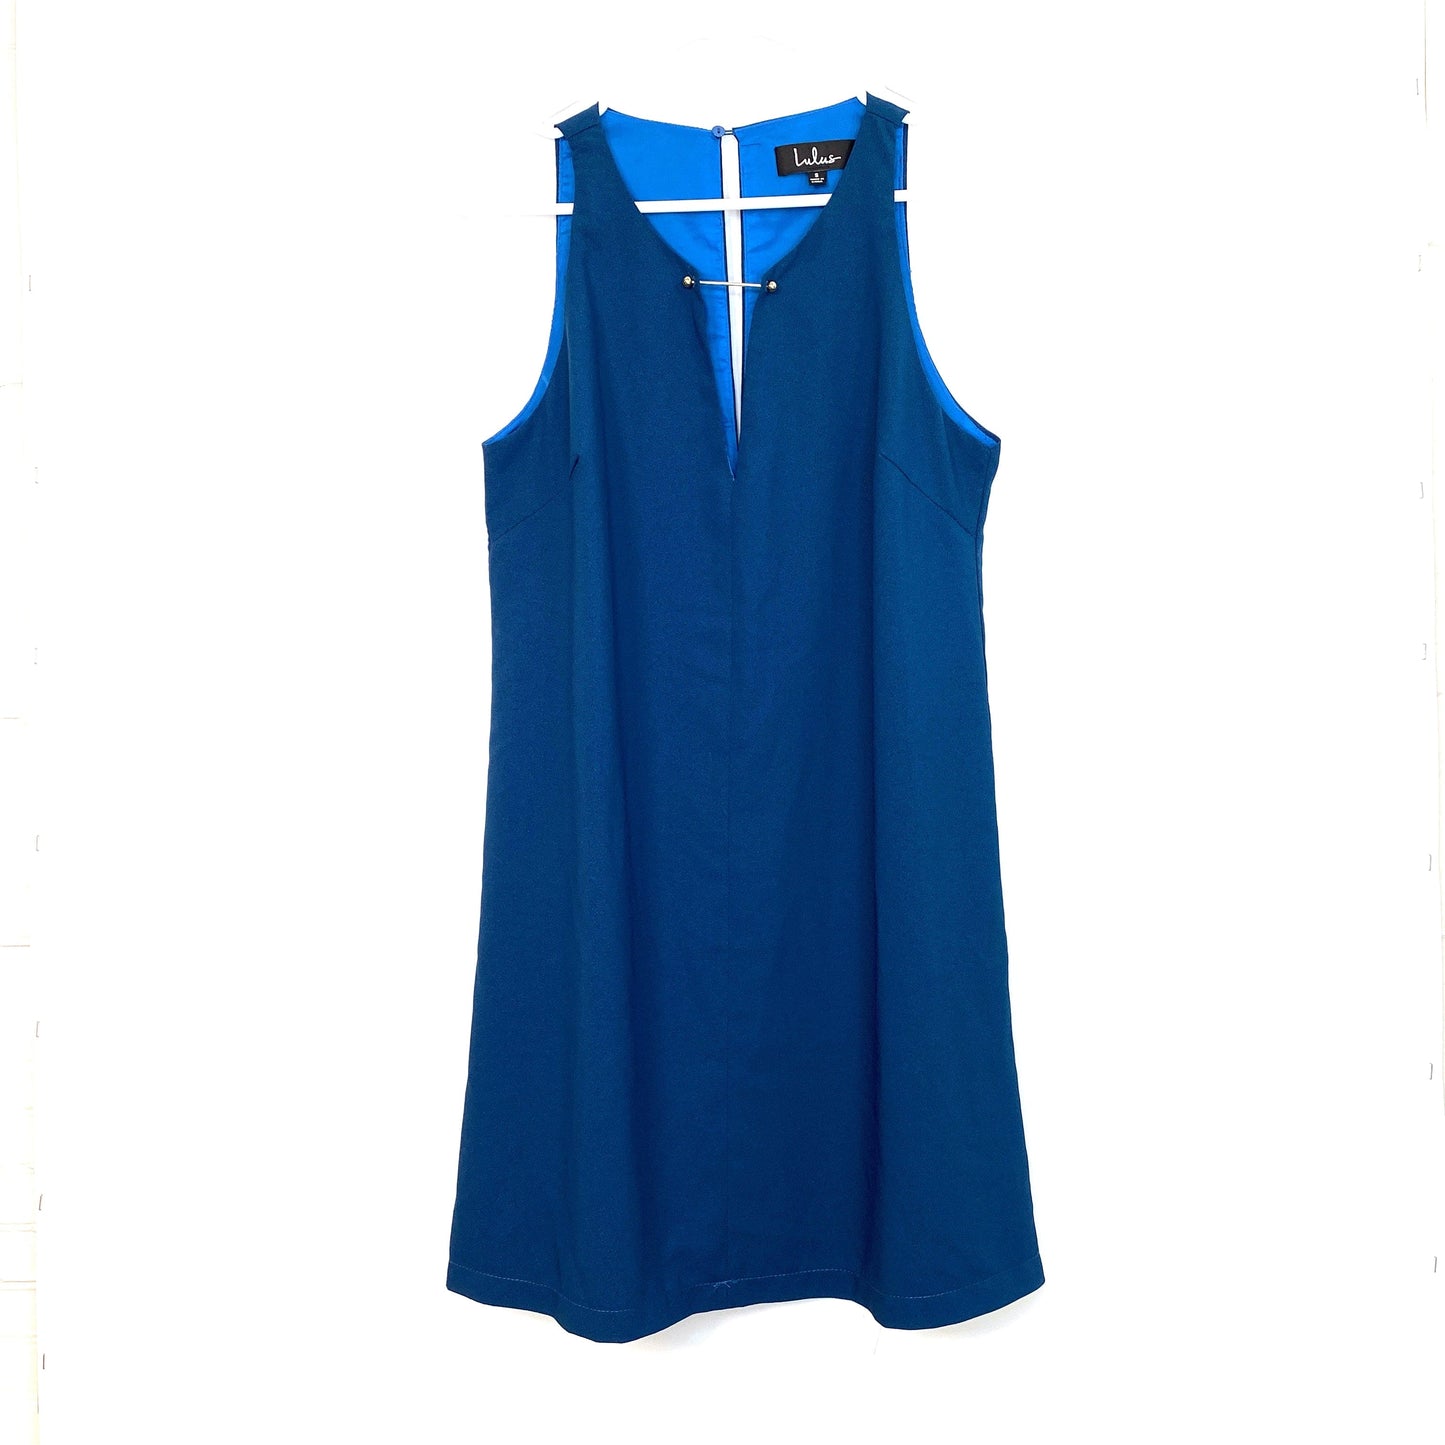 Glamorous LuLu's Blue Sheath Dress - Sleeveless, Size S